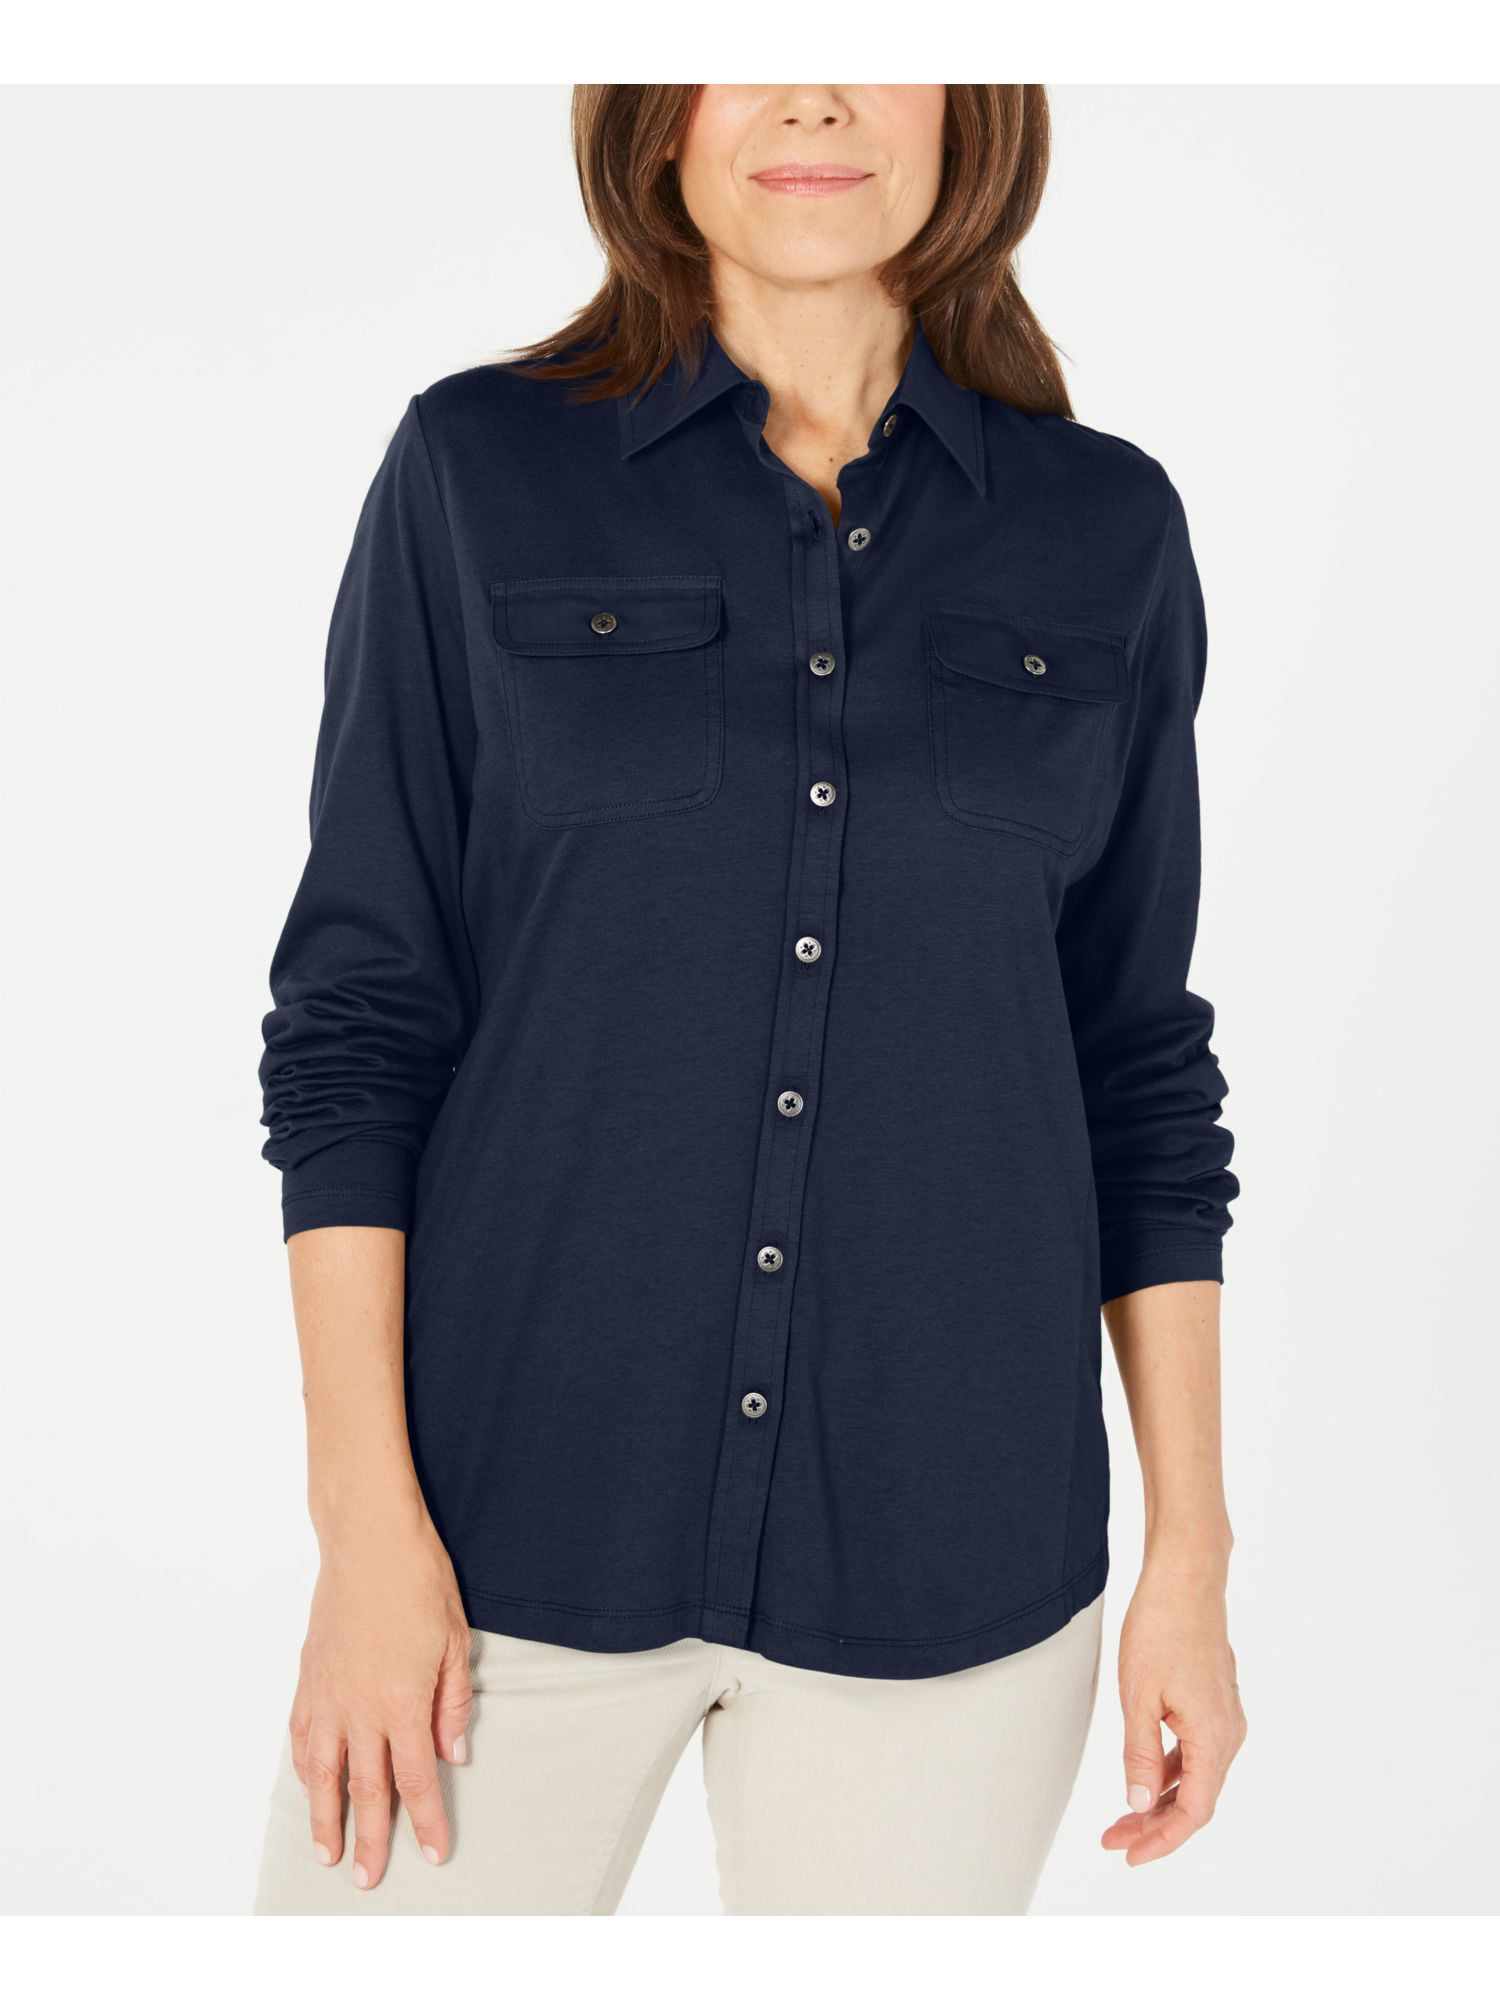 GAGA Mens Premium High Collar Long Sleeves Shirt Irregular Button Stand-up Casual Dress Shirt